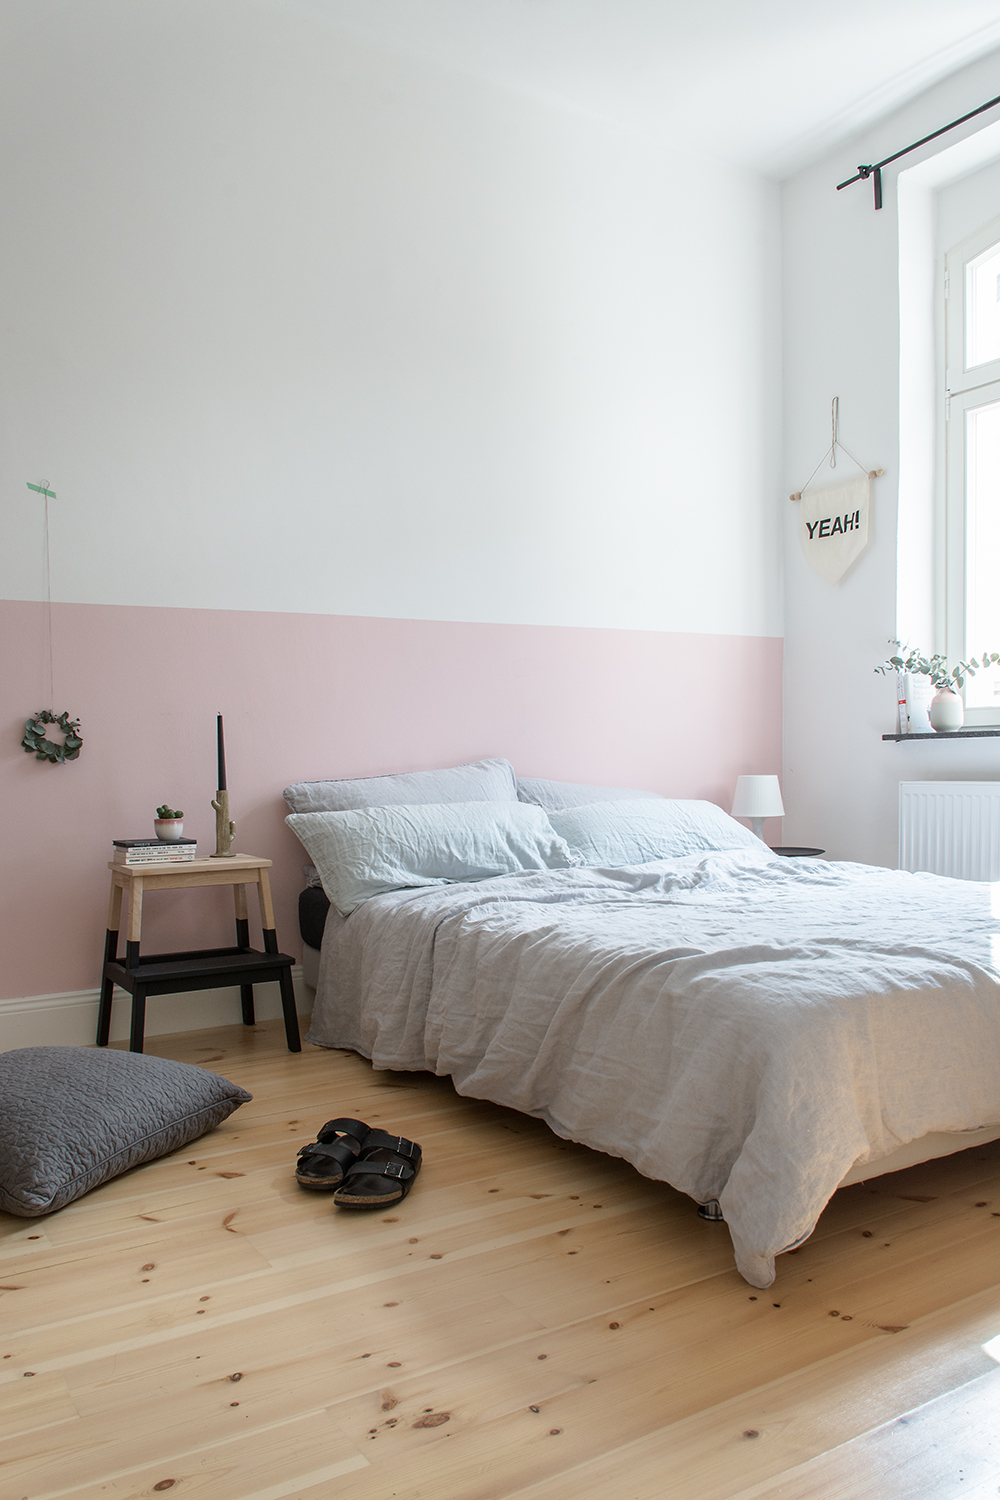 Half painted pink wall in the bedroom - www.craftifair.de